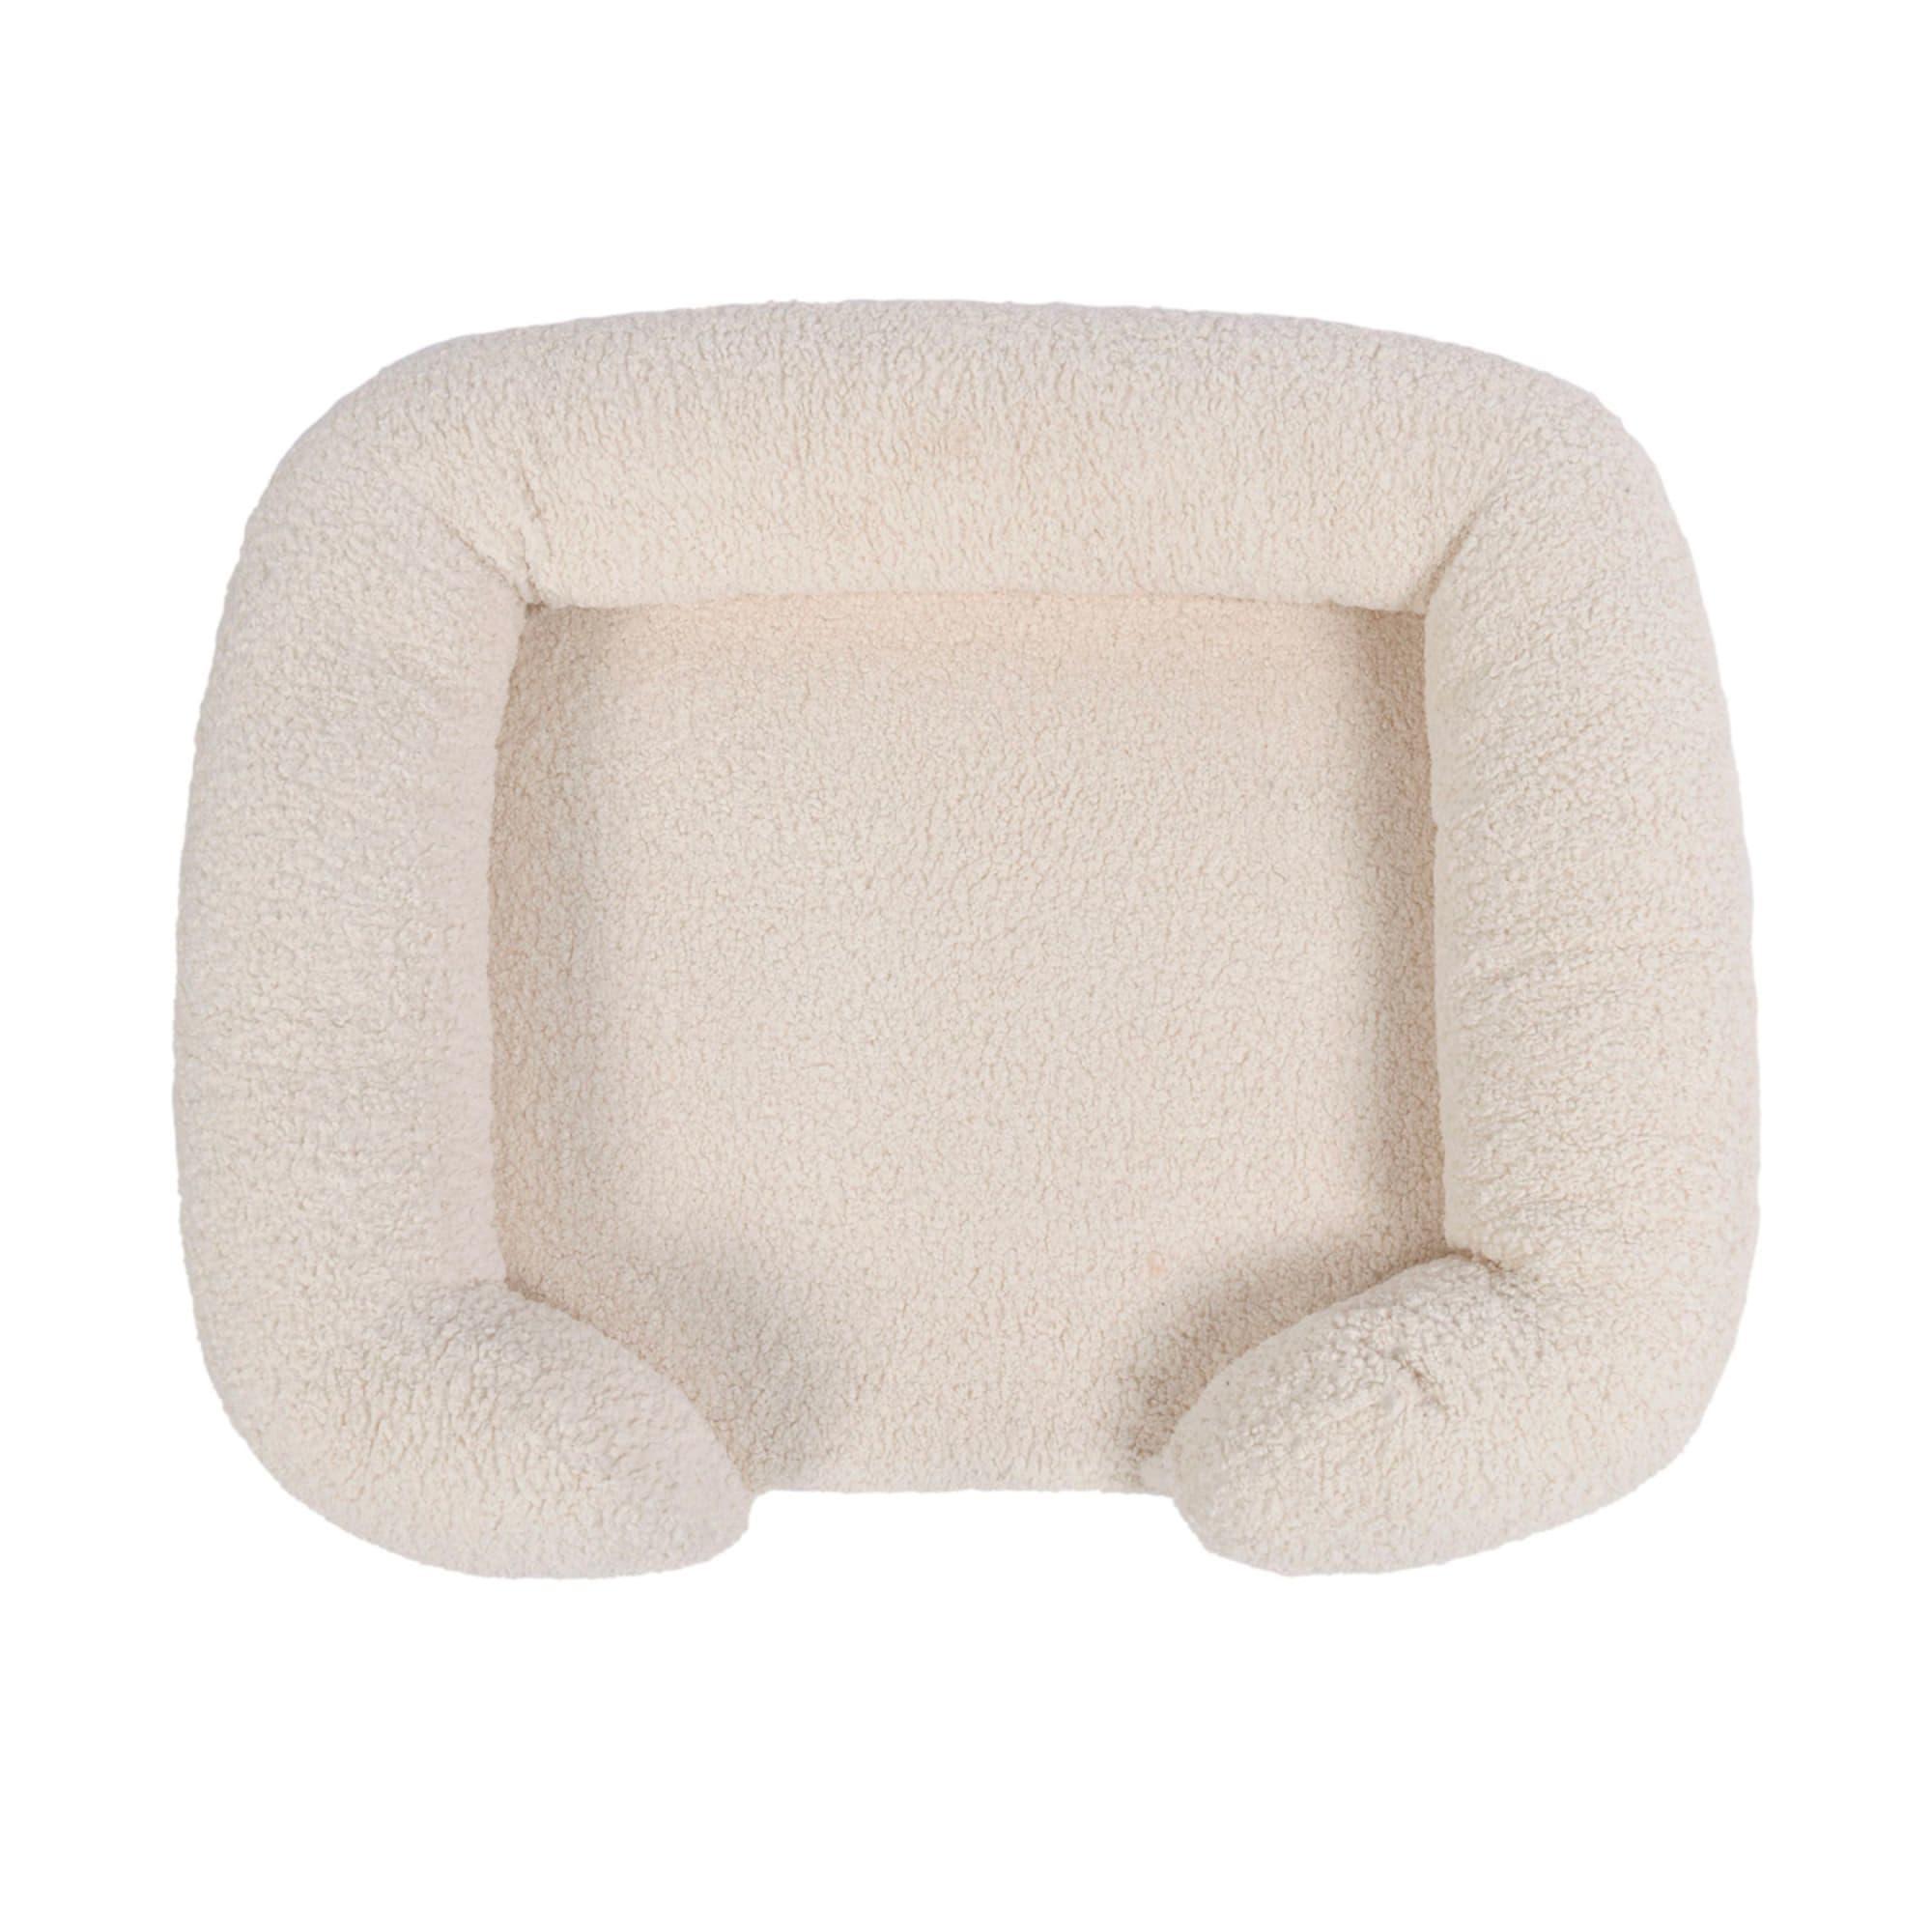 Charlie's Teddy Fleece Orthopedic Memory Foam Sofa Dog Bed Medium Cream Image 4